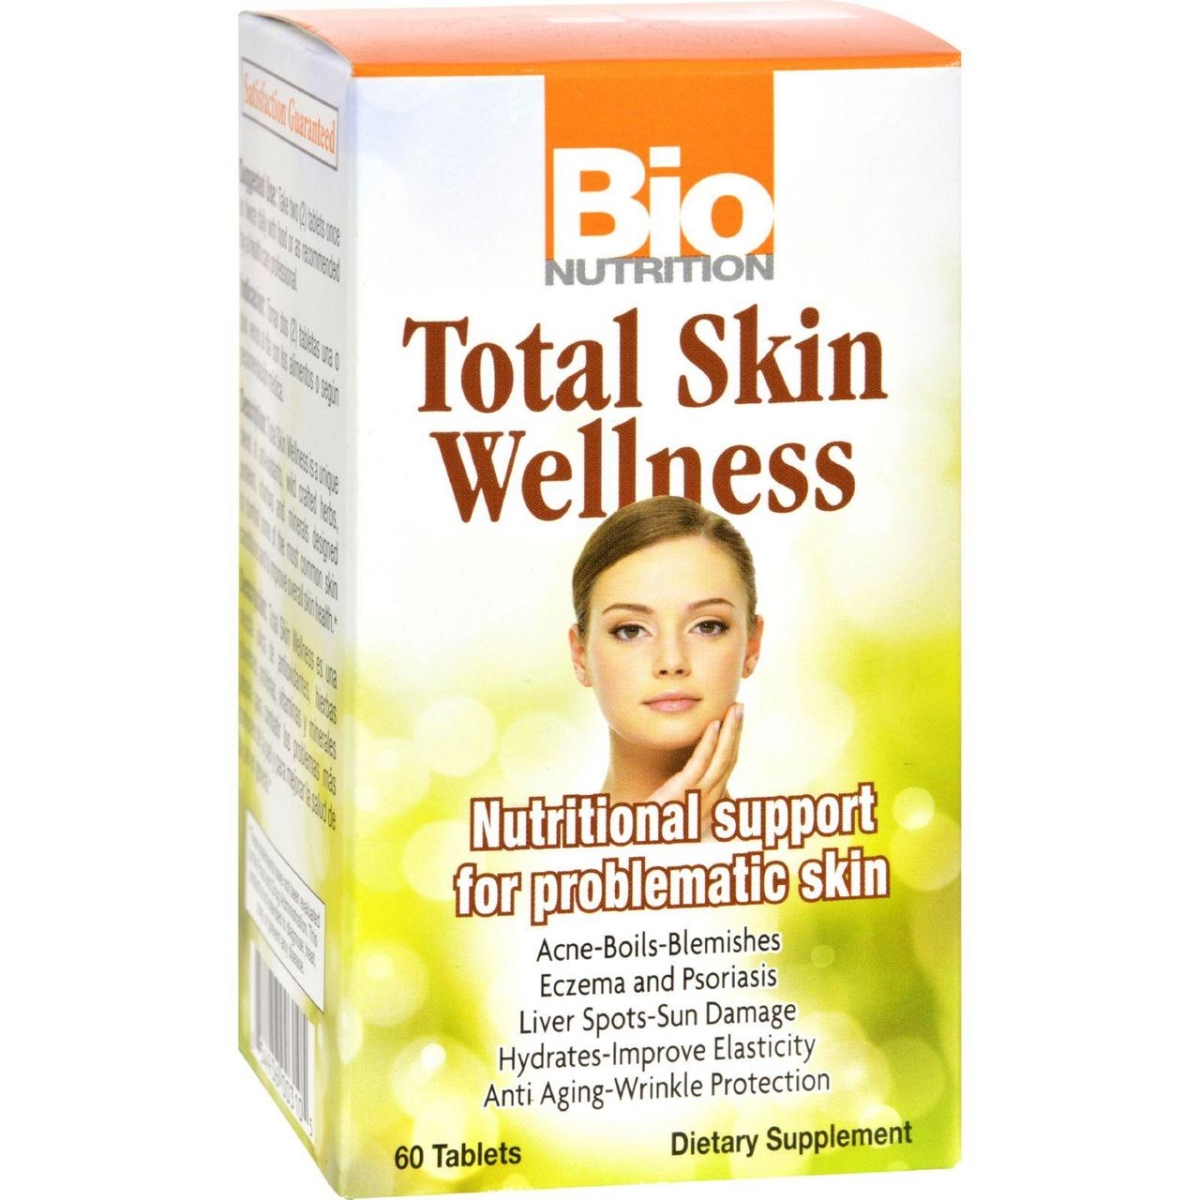 Bio Nutrition Hg1086099 Total Skin Wellness - 60 Tablets